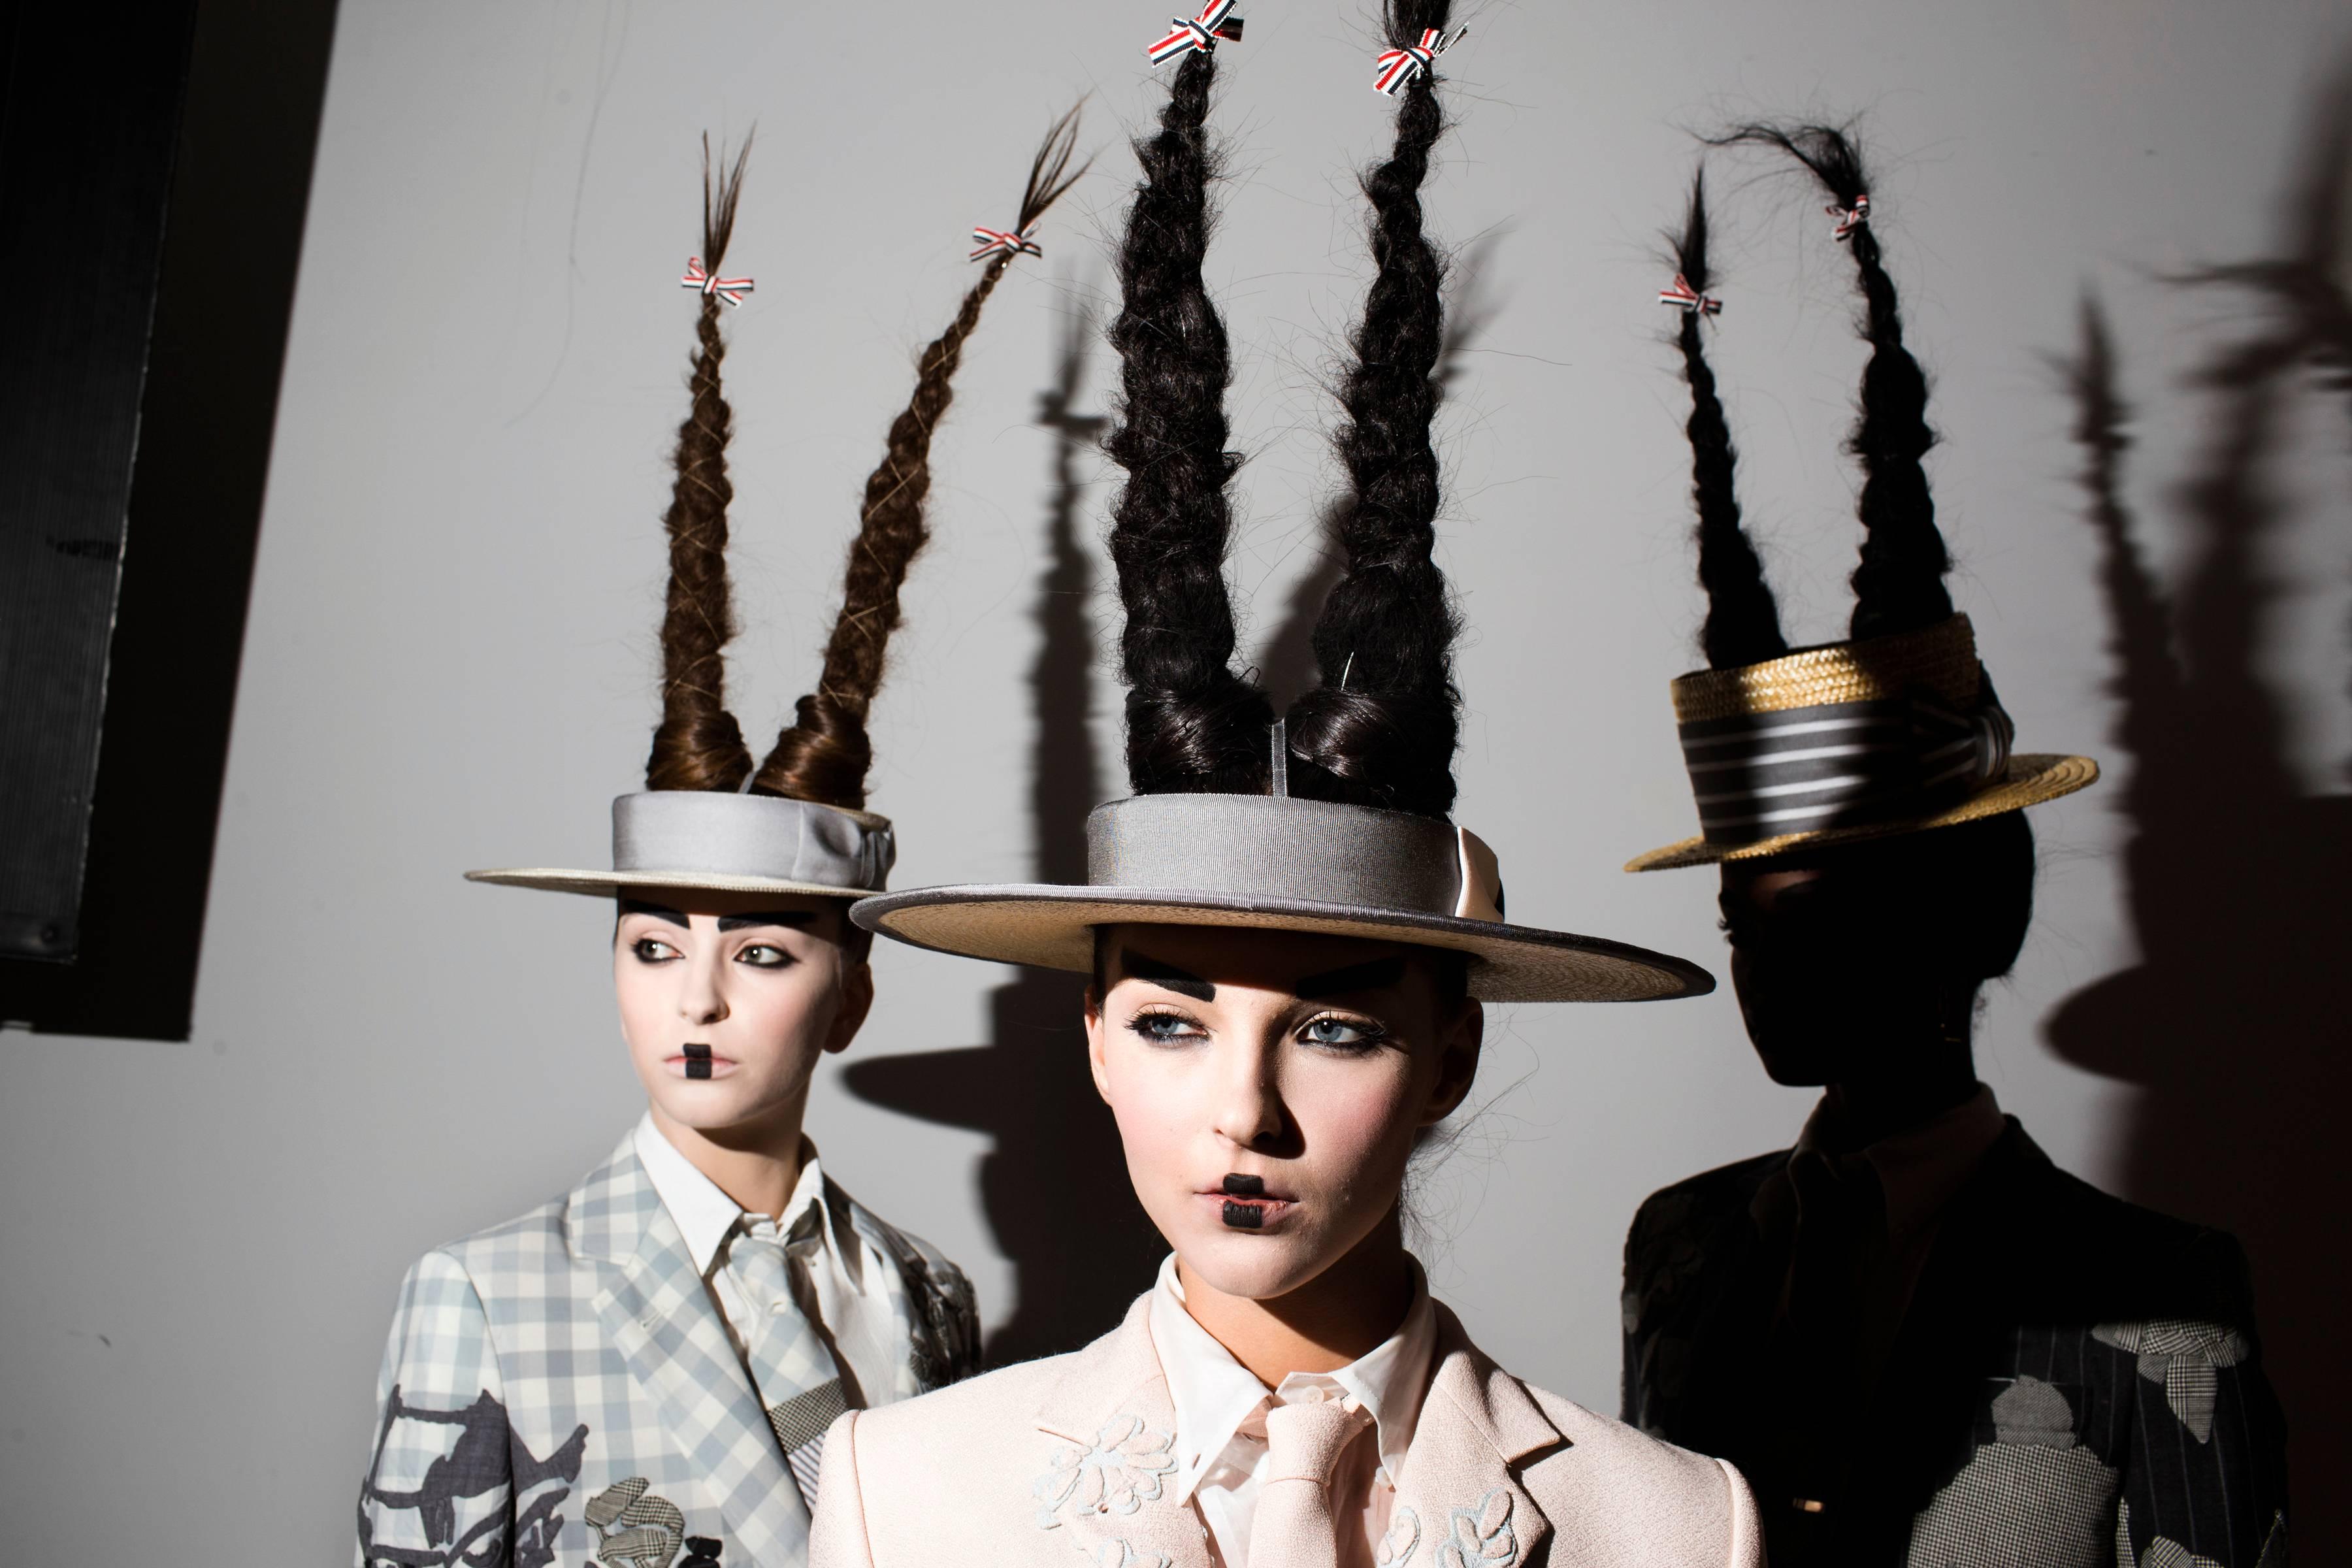 Landon Nordeman Figurative Photograph - "Thom Browne (Hats & Hair)" - Celebrity Fashion Photography - Winogrand